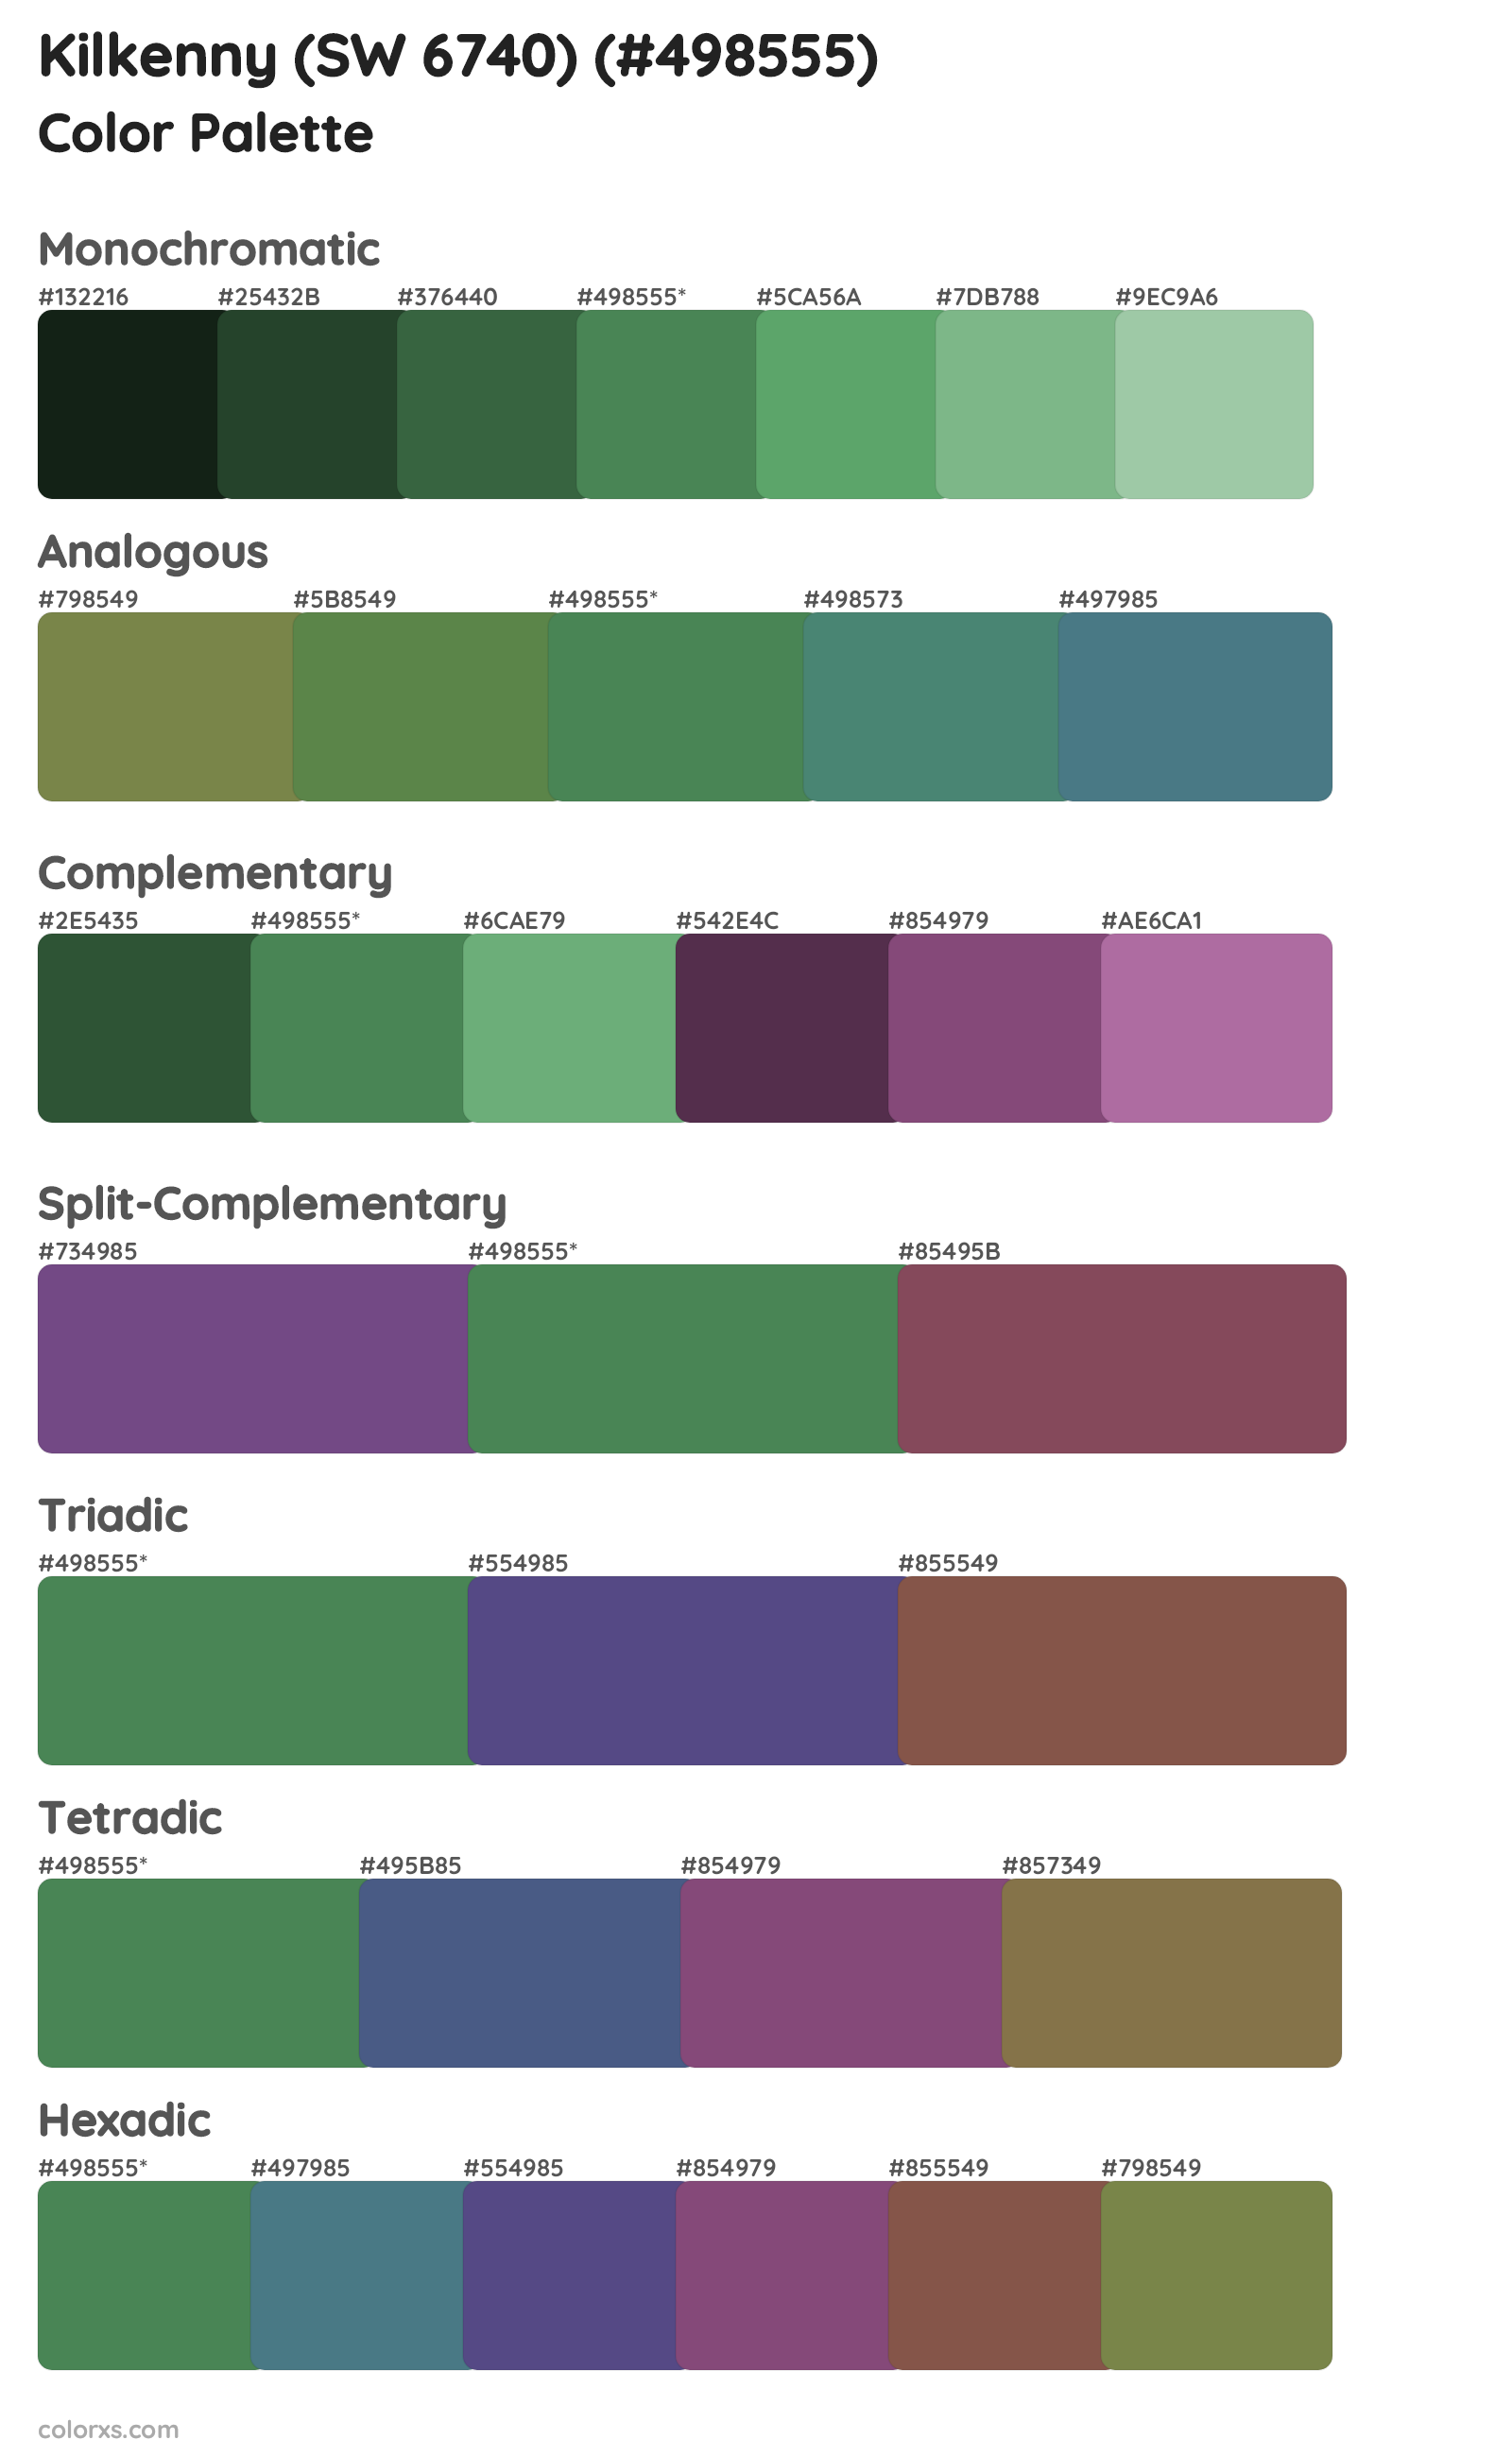 Kilkenny (SW 6740) Color Scheme Palettes